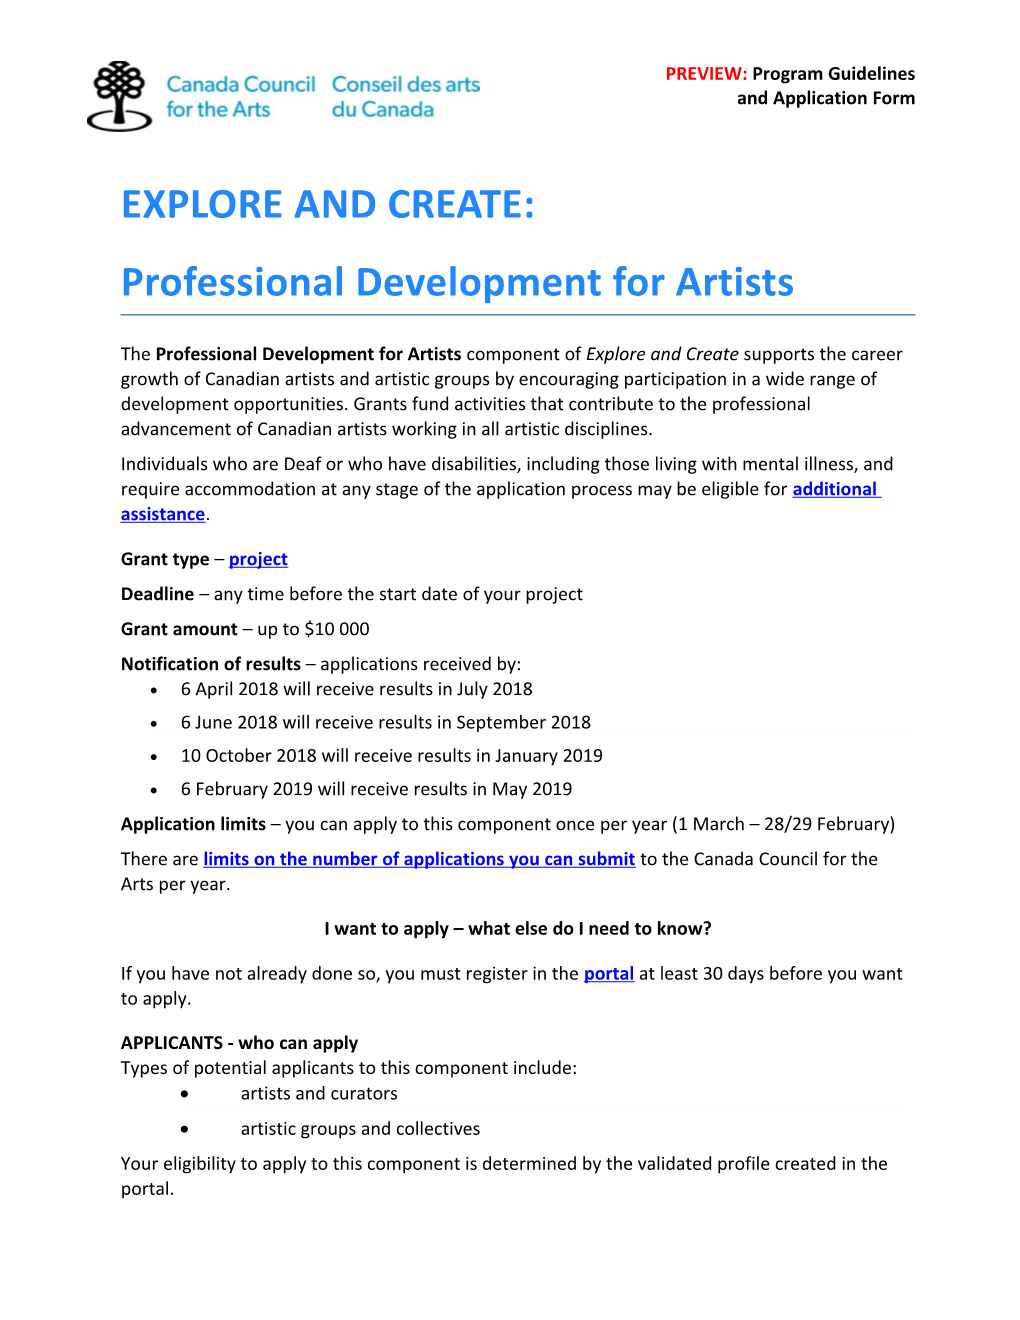 Professional Development for Artists